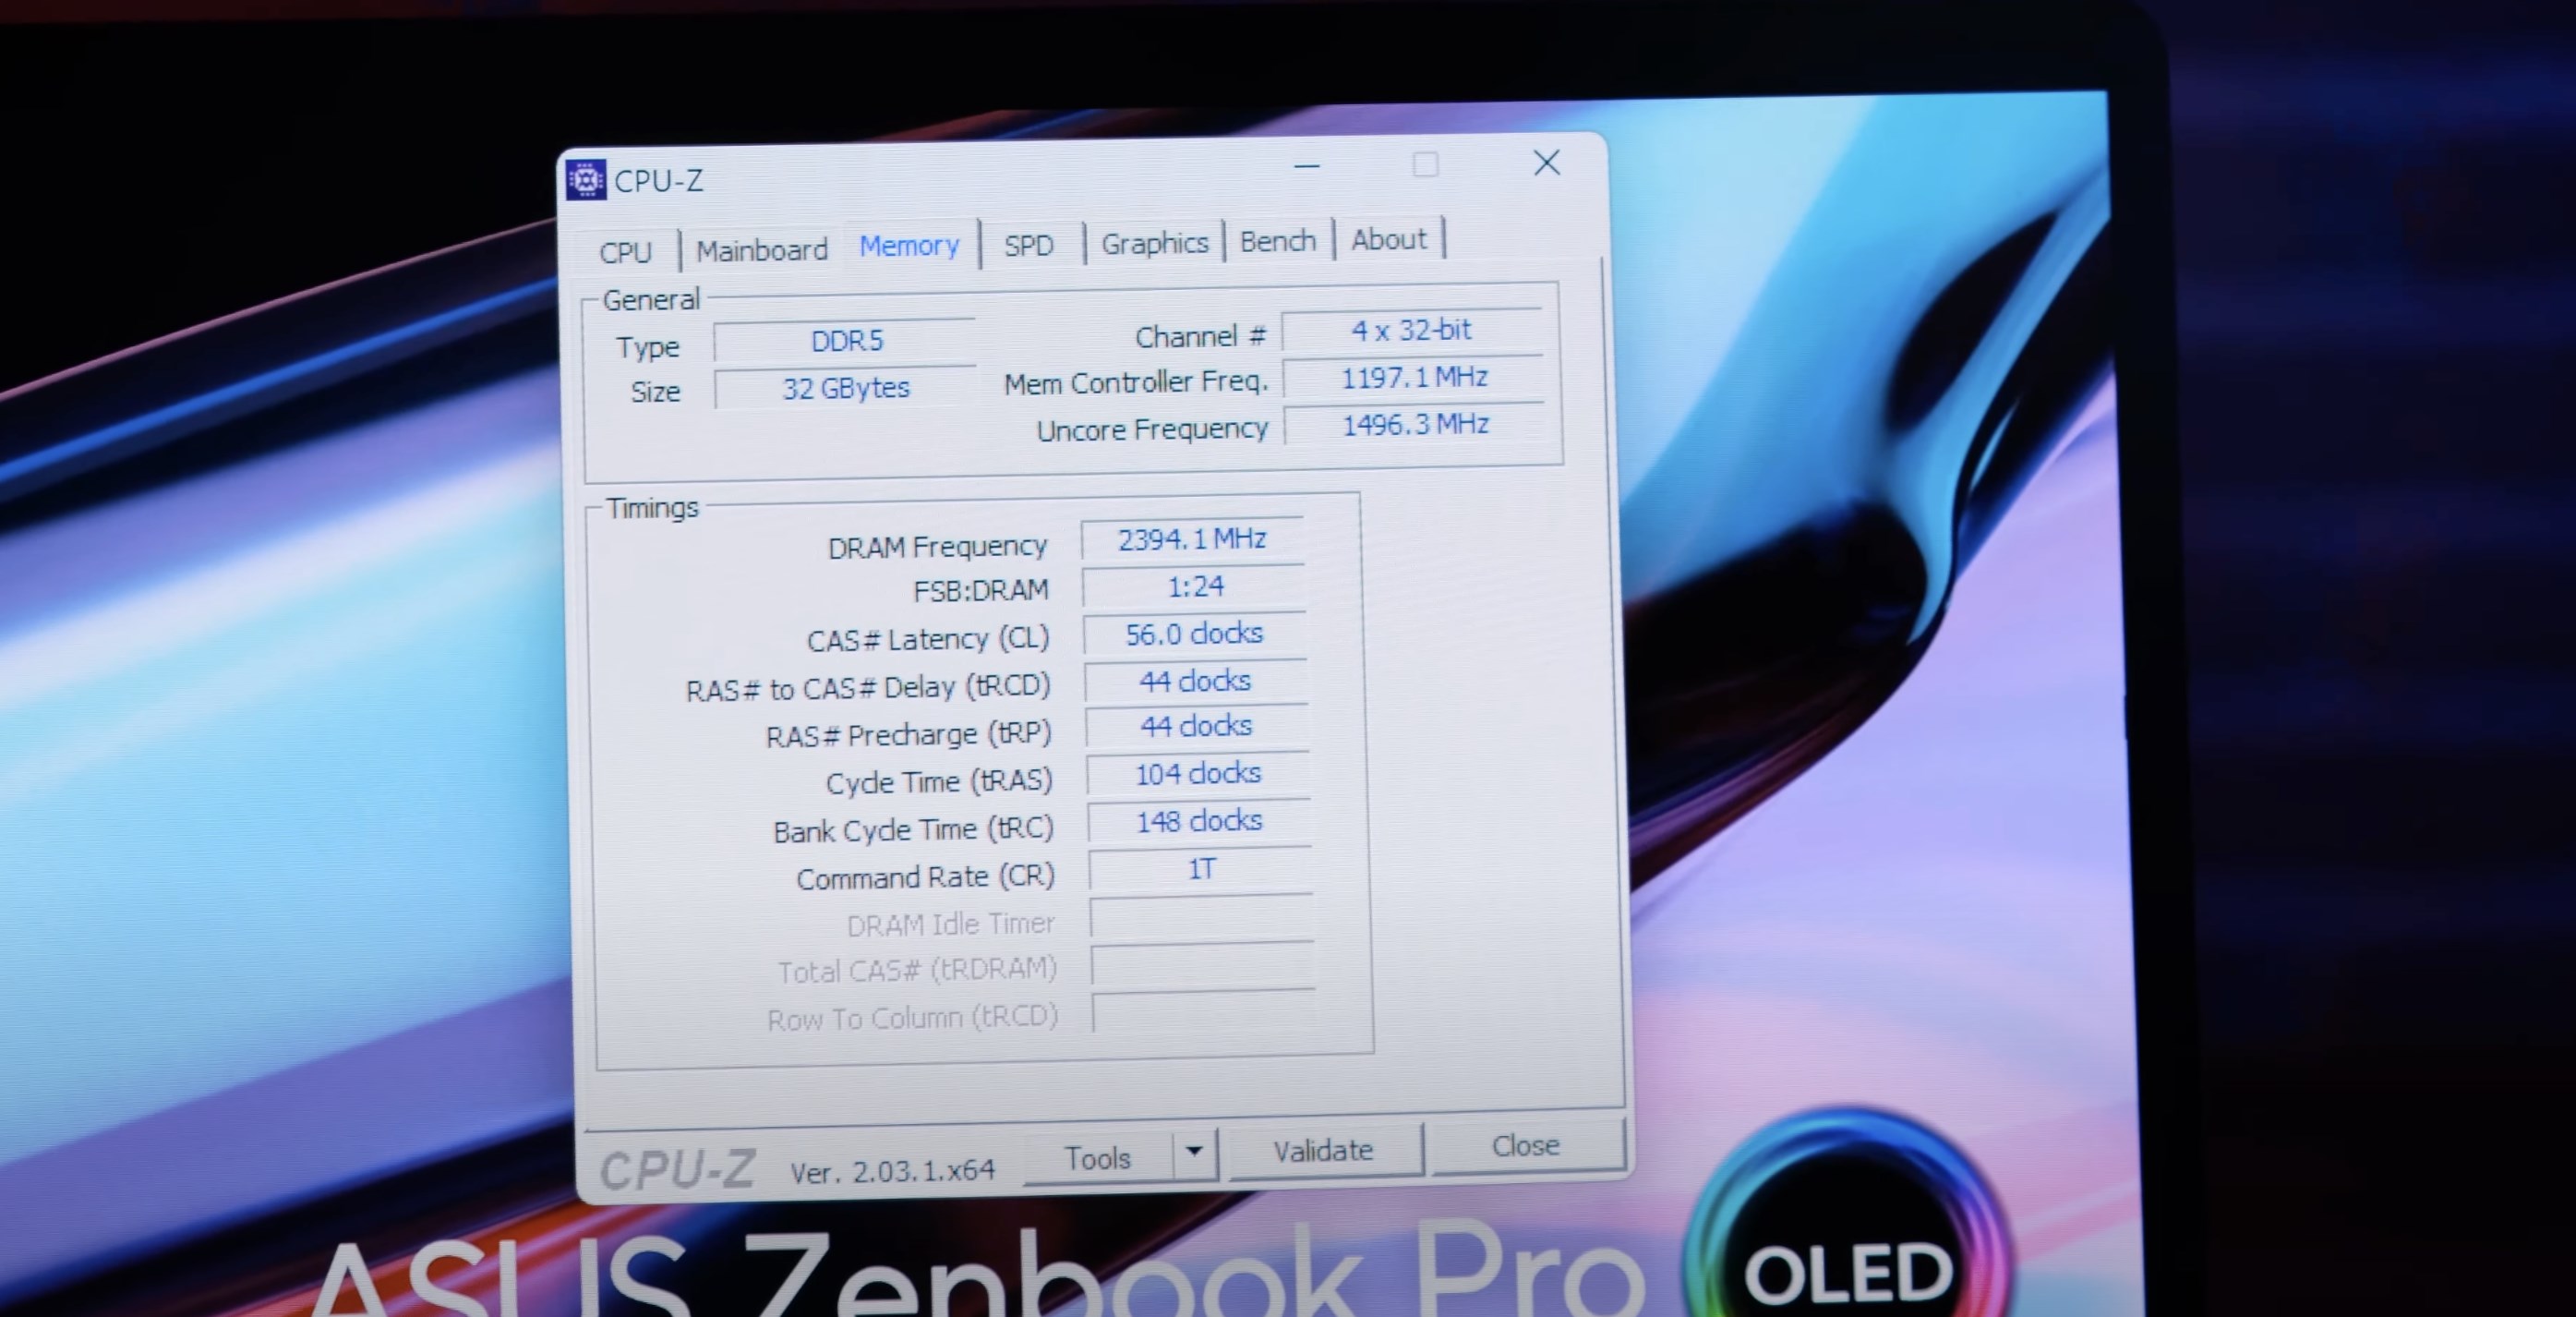 Asus Zenbook Pro 14 Duo OLED incelemesi!